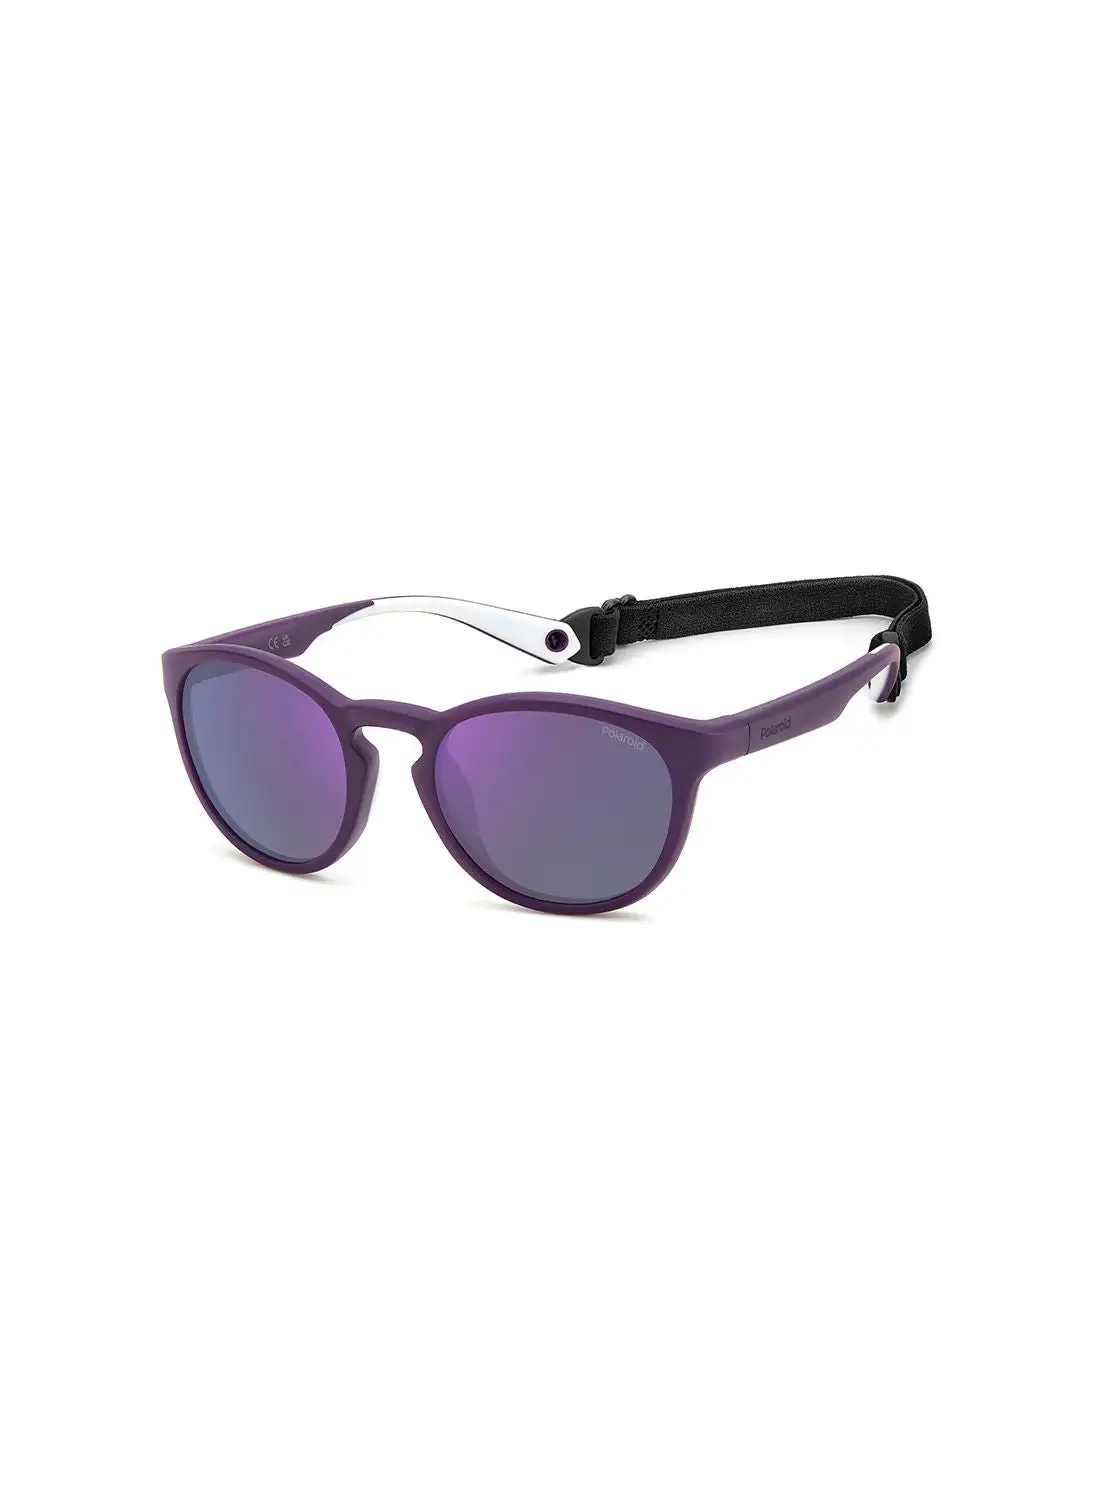 Polaroid Unisex UV Protection Round Sunglasses - Pld 7050/S Violet 52 - Lens Size: 52 Mm